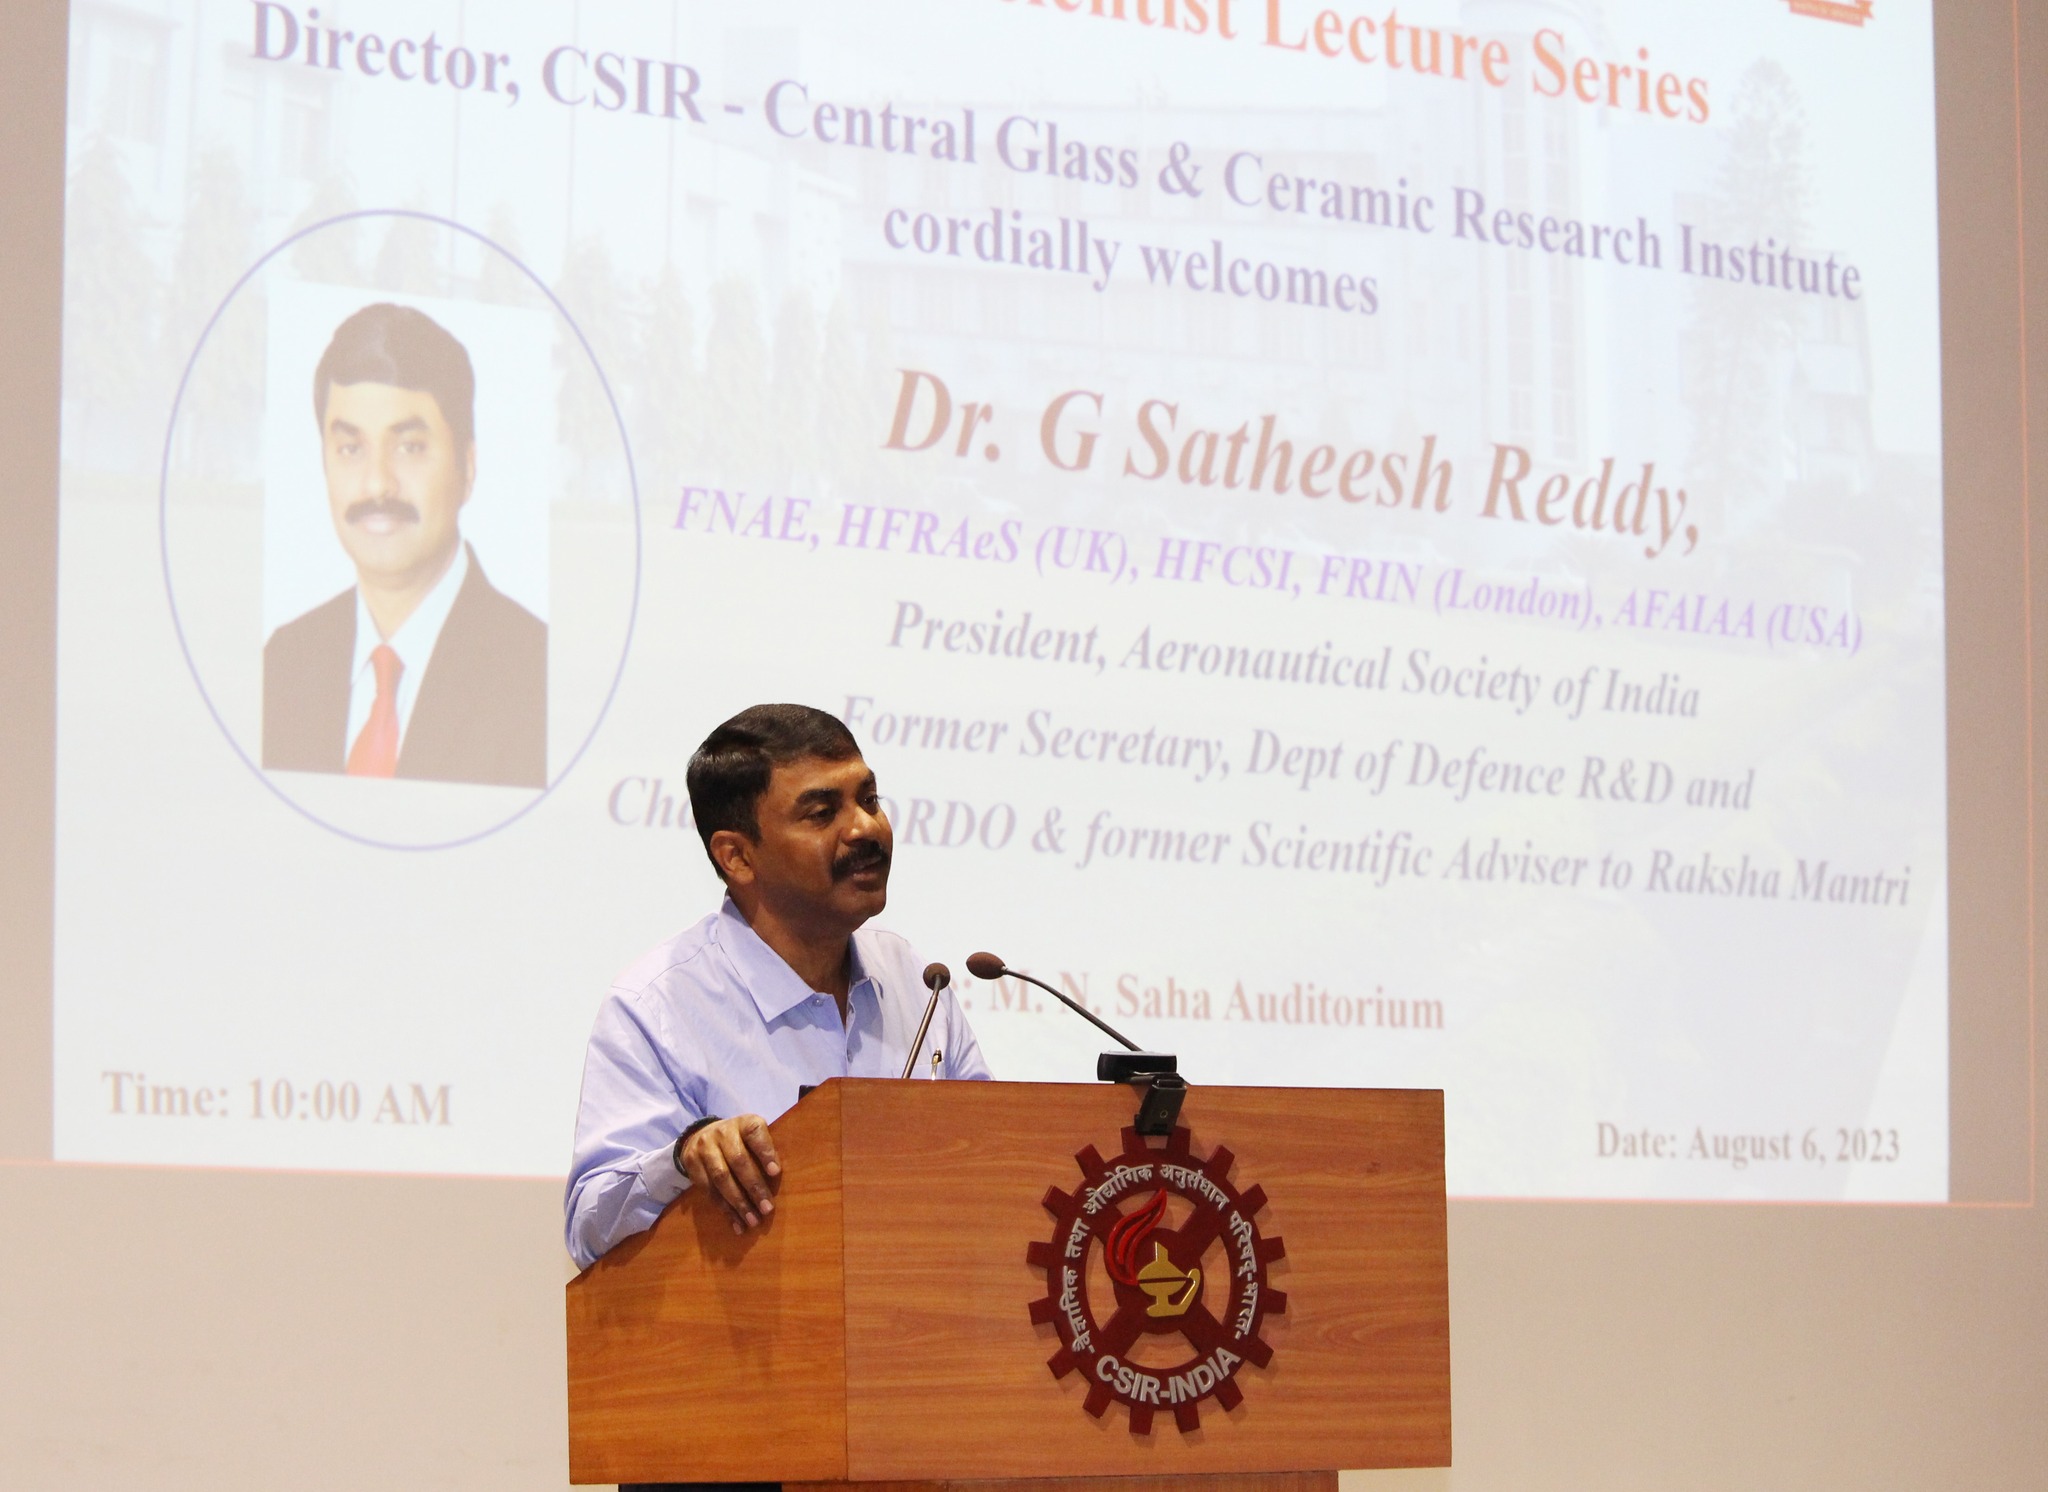 Dr. G. Satheesh Reddy, President, Aeronautical Society of India, Former Secretary, Dept of Defence R&D and Chairman DRDO & Former Scientific Adviser to Raksha Mantri visited CSIR-CGCRI on August 06, 2023